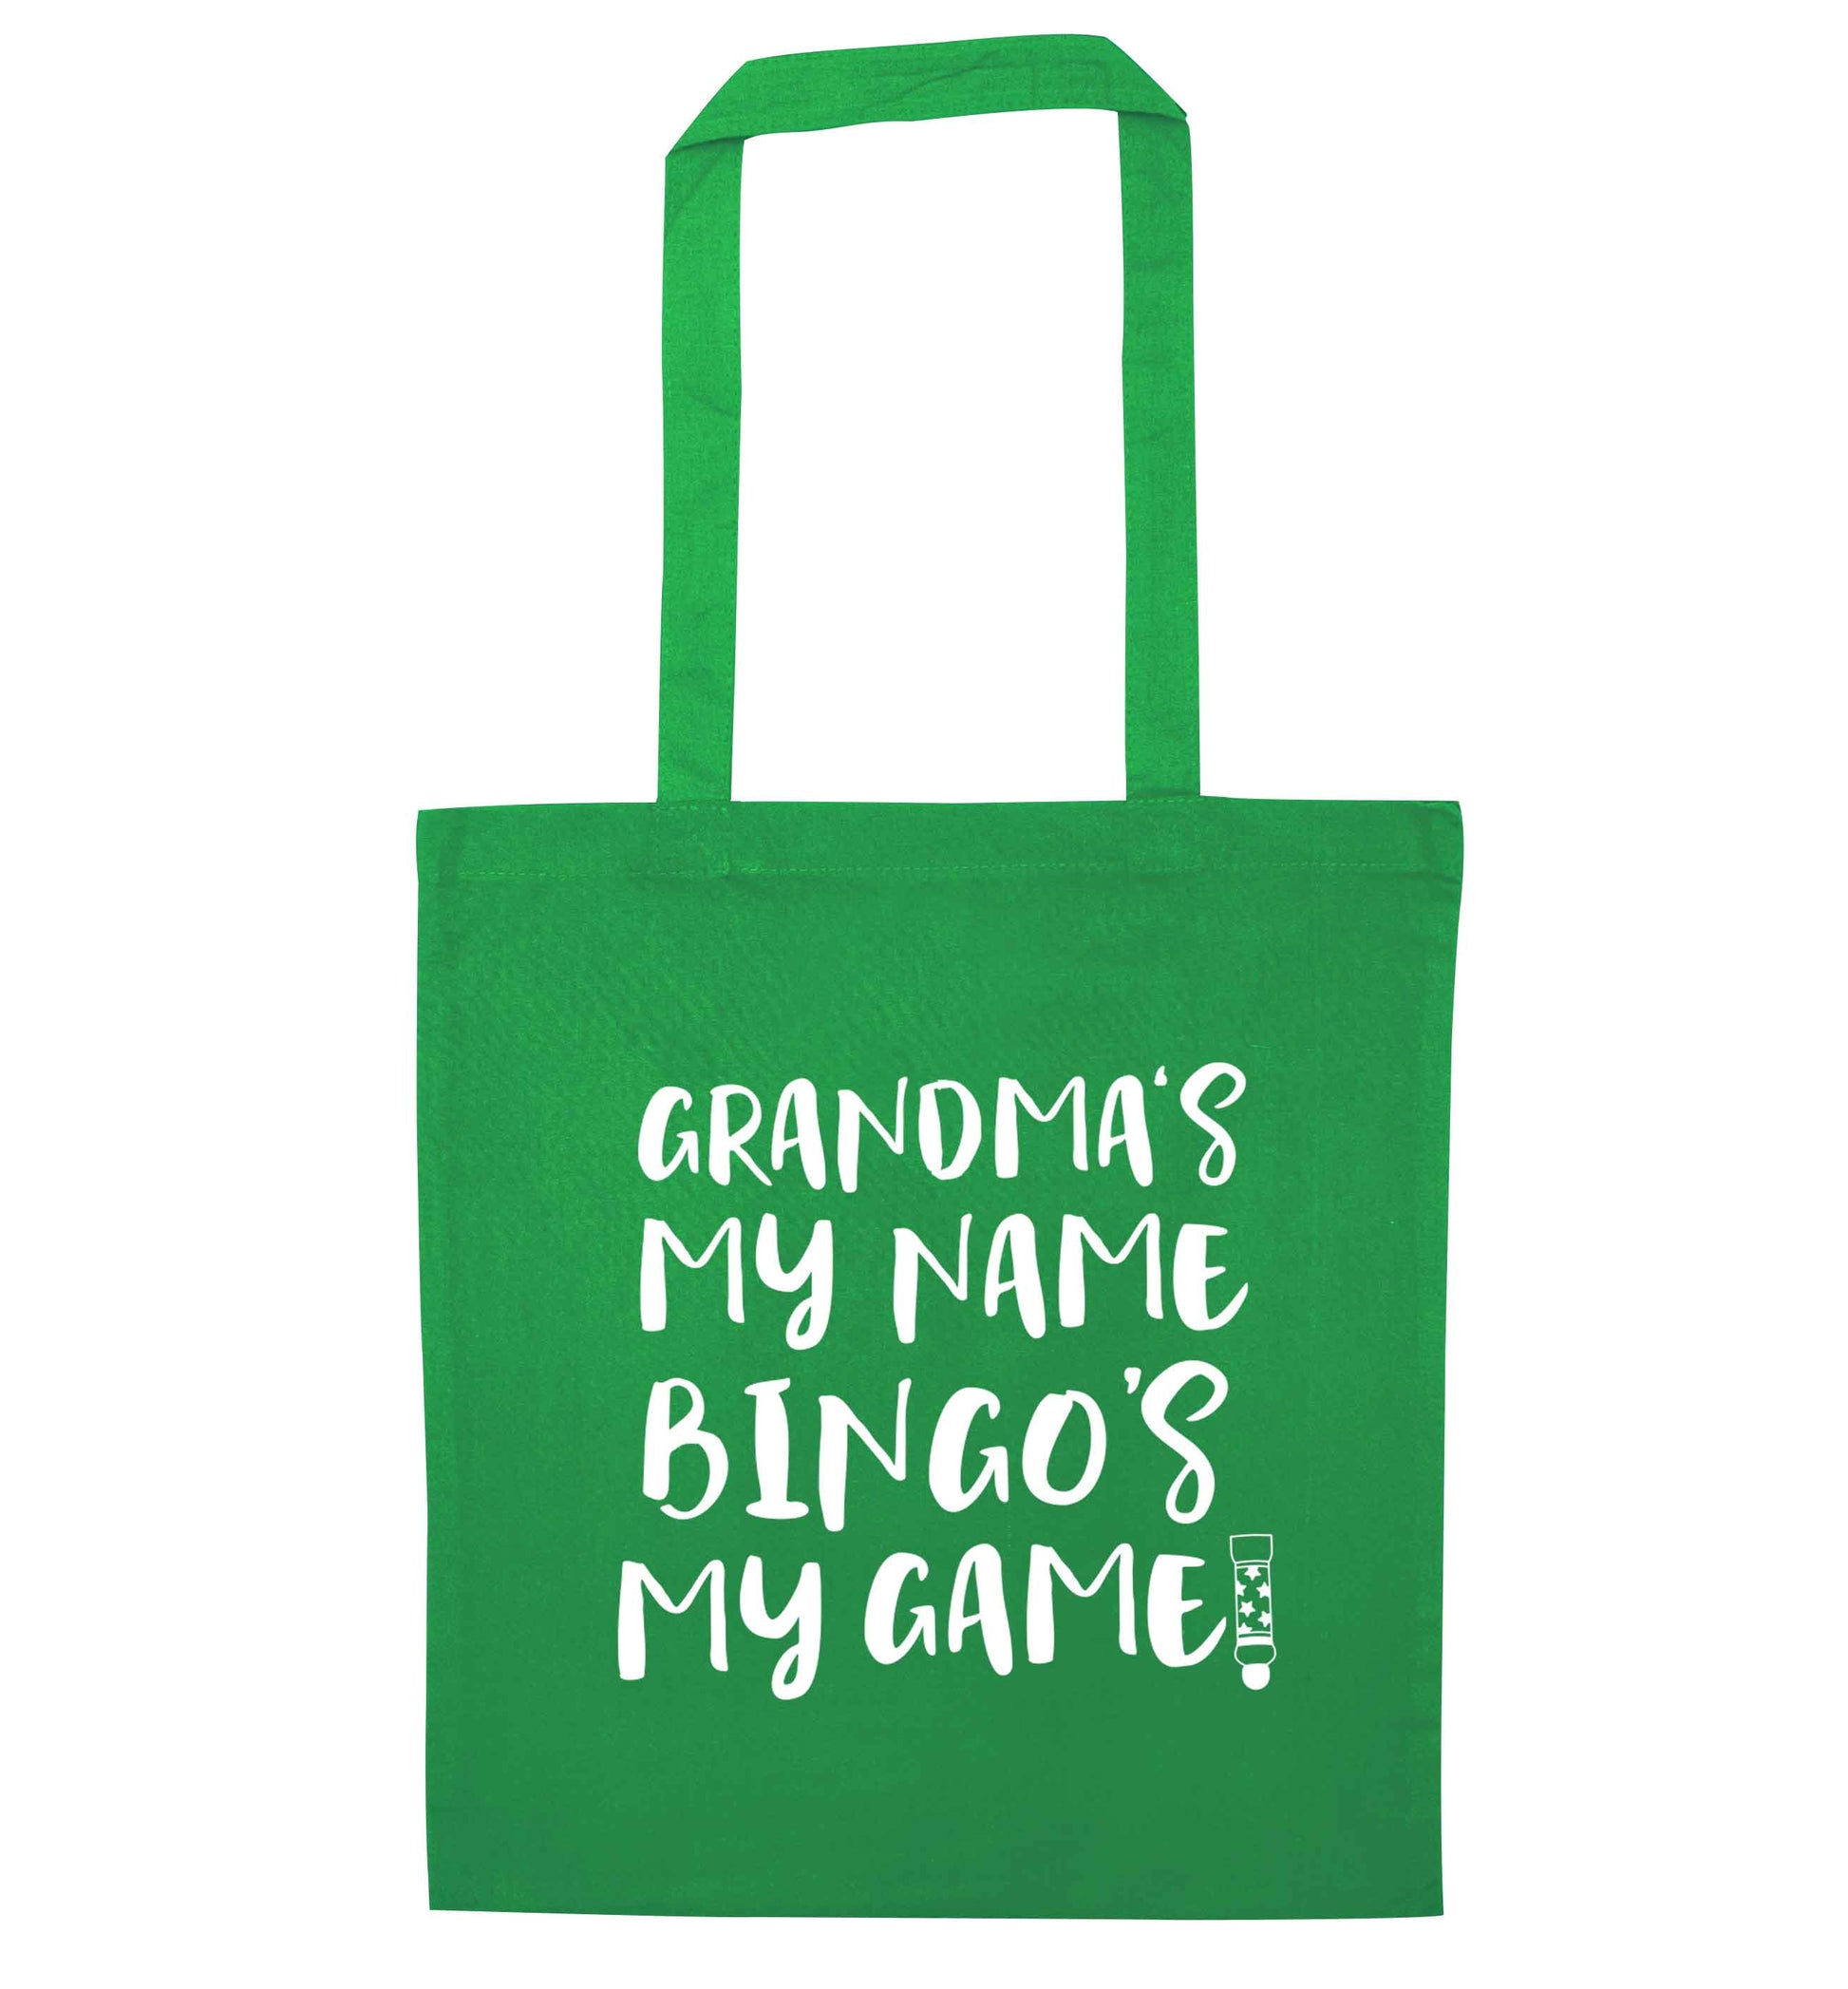 Grandma's my name bingo's my game! green tote bag